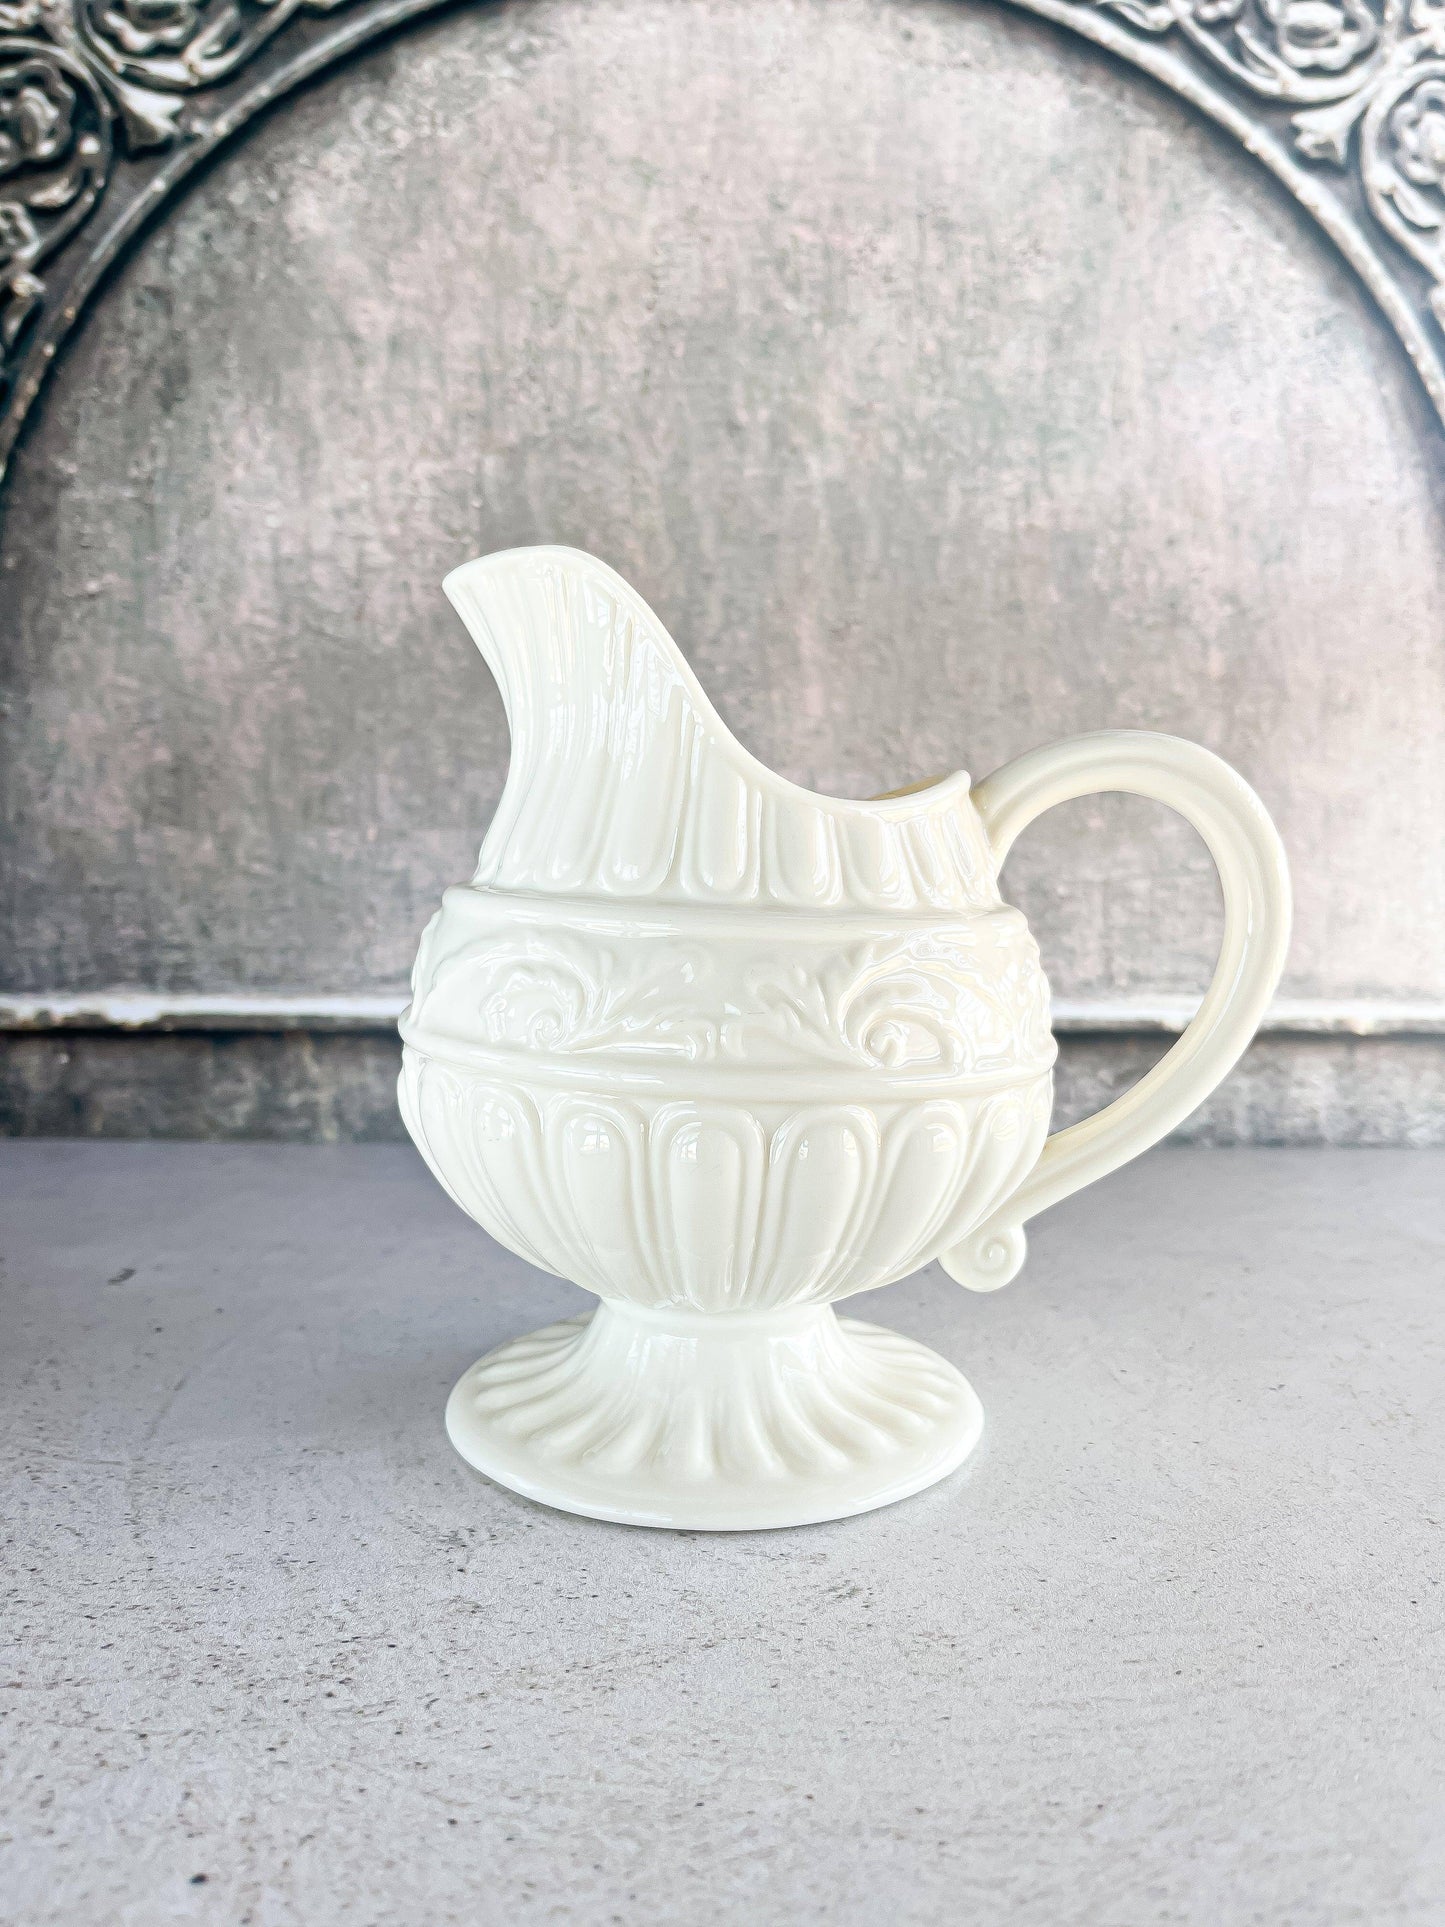 Oversized Creamware Ceramic Creamer with Classical Motifs - SOSC Home